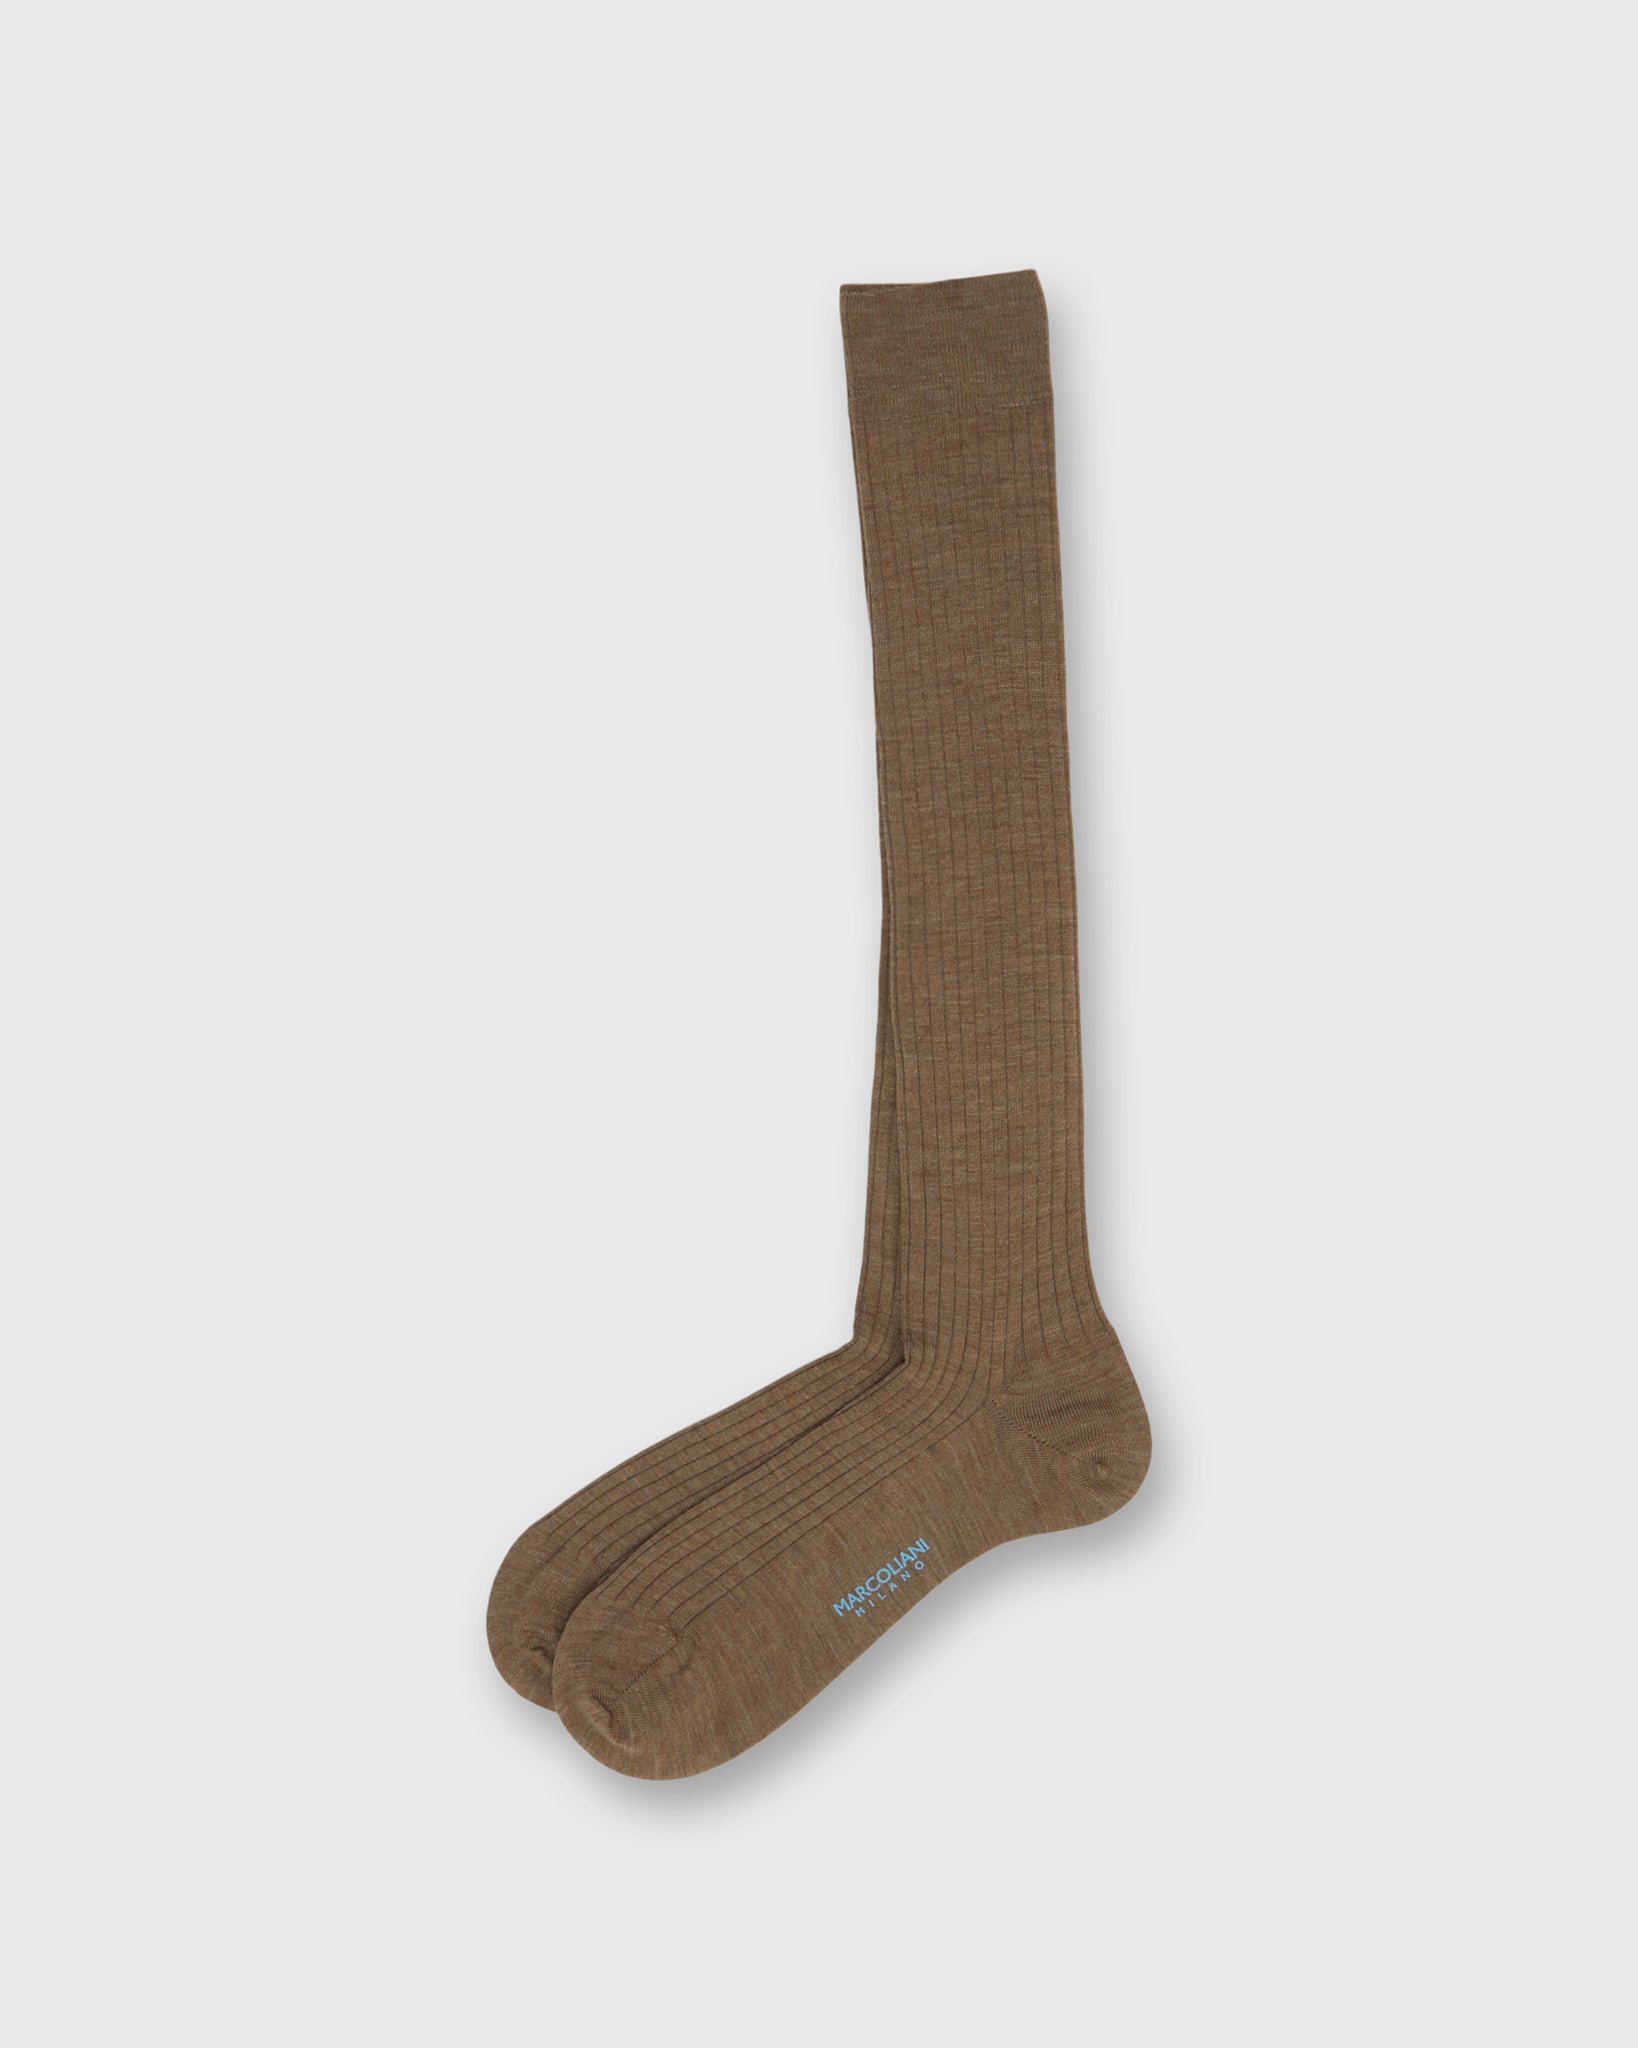 Over-The-Calf Dress Socks in Natural Extra Fine Merino